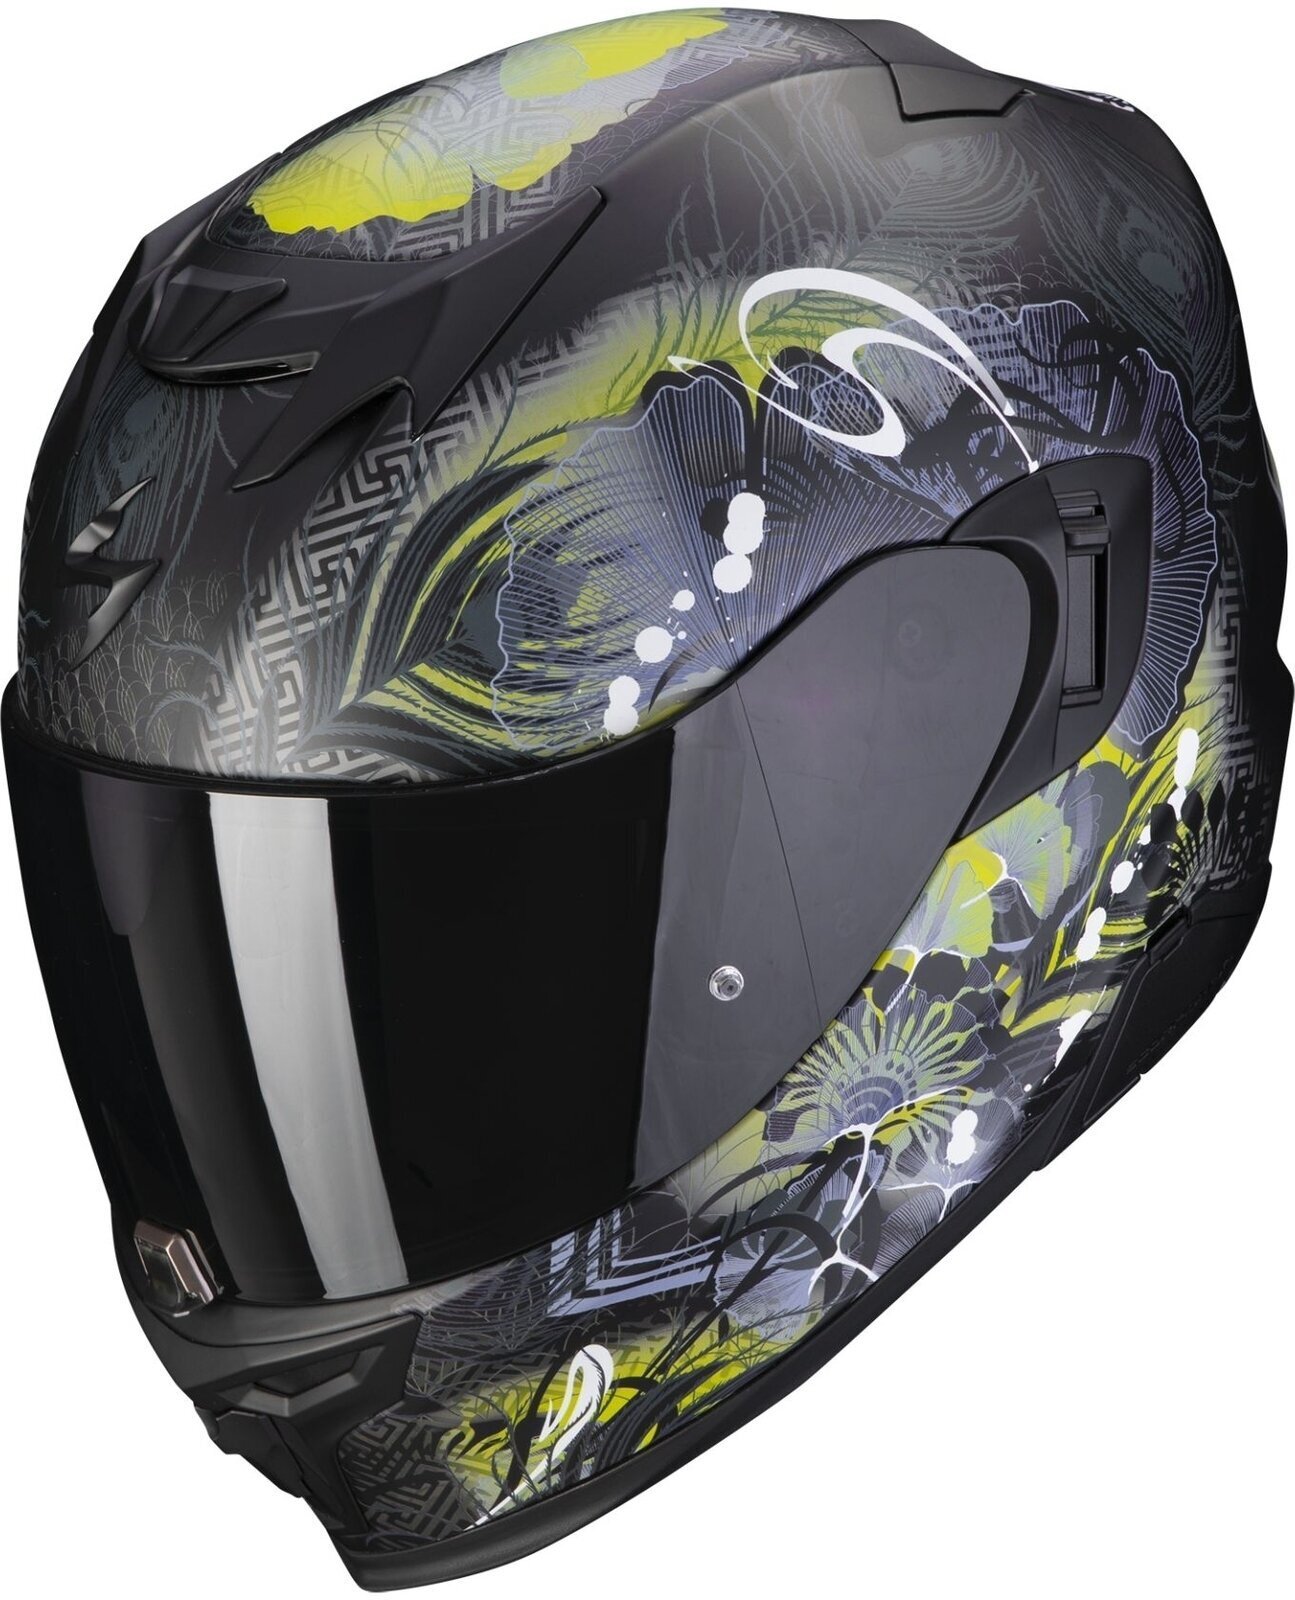 Helm Scorpion EXO 520 EVO AIR MELROSE Matt Black/Yellow L Helm